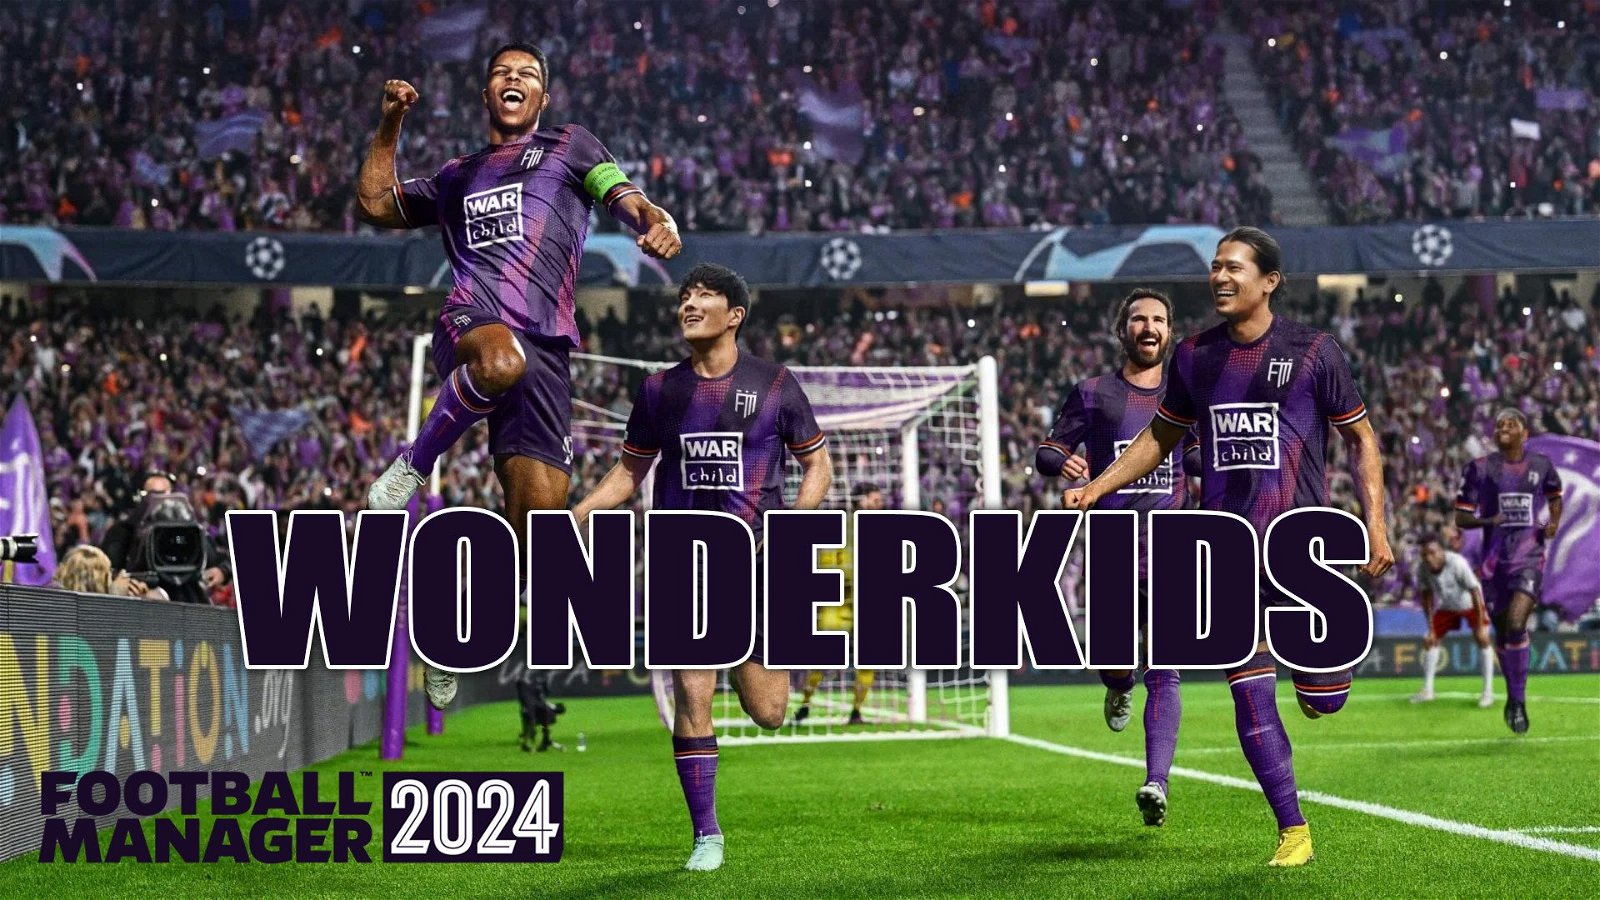 Immagine di Football Manager 2024 | Wonderkids - Giovani promesse